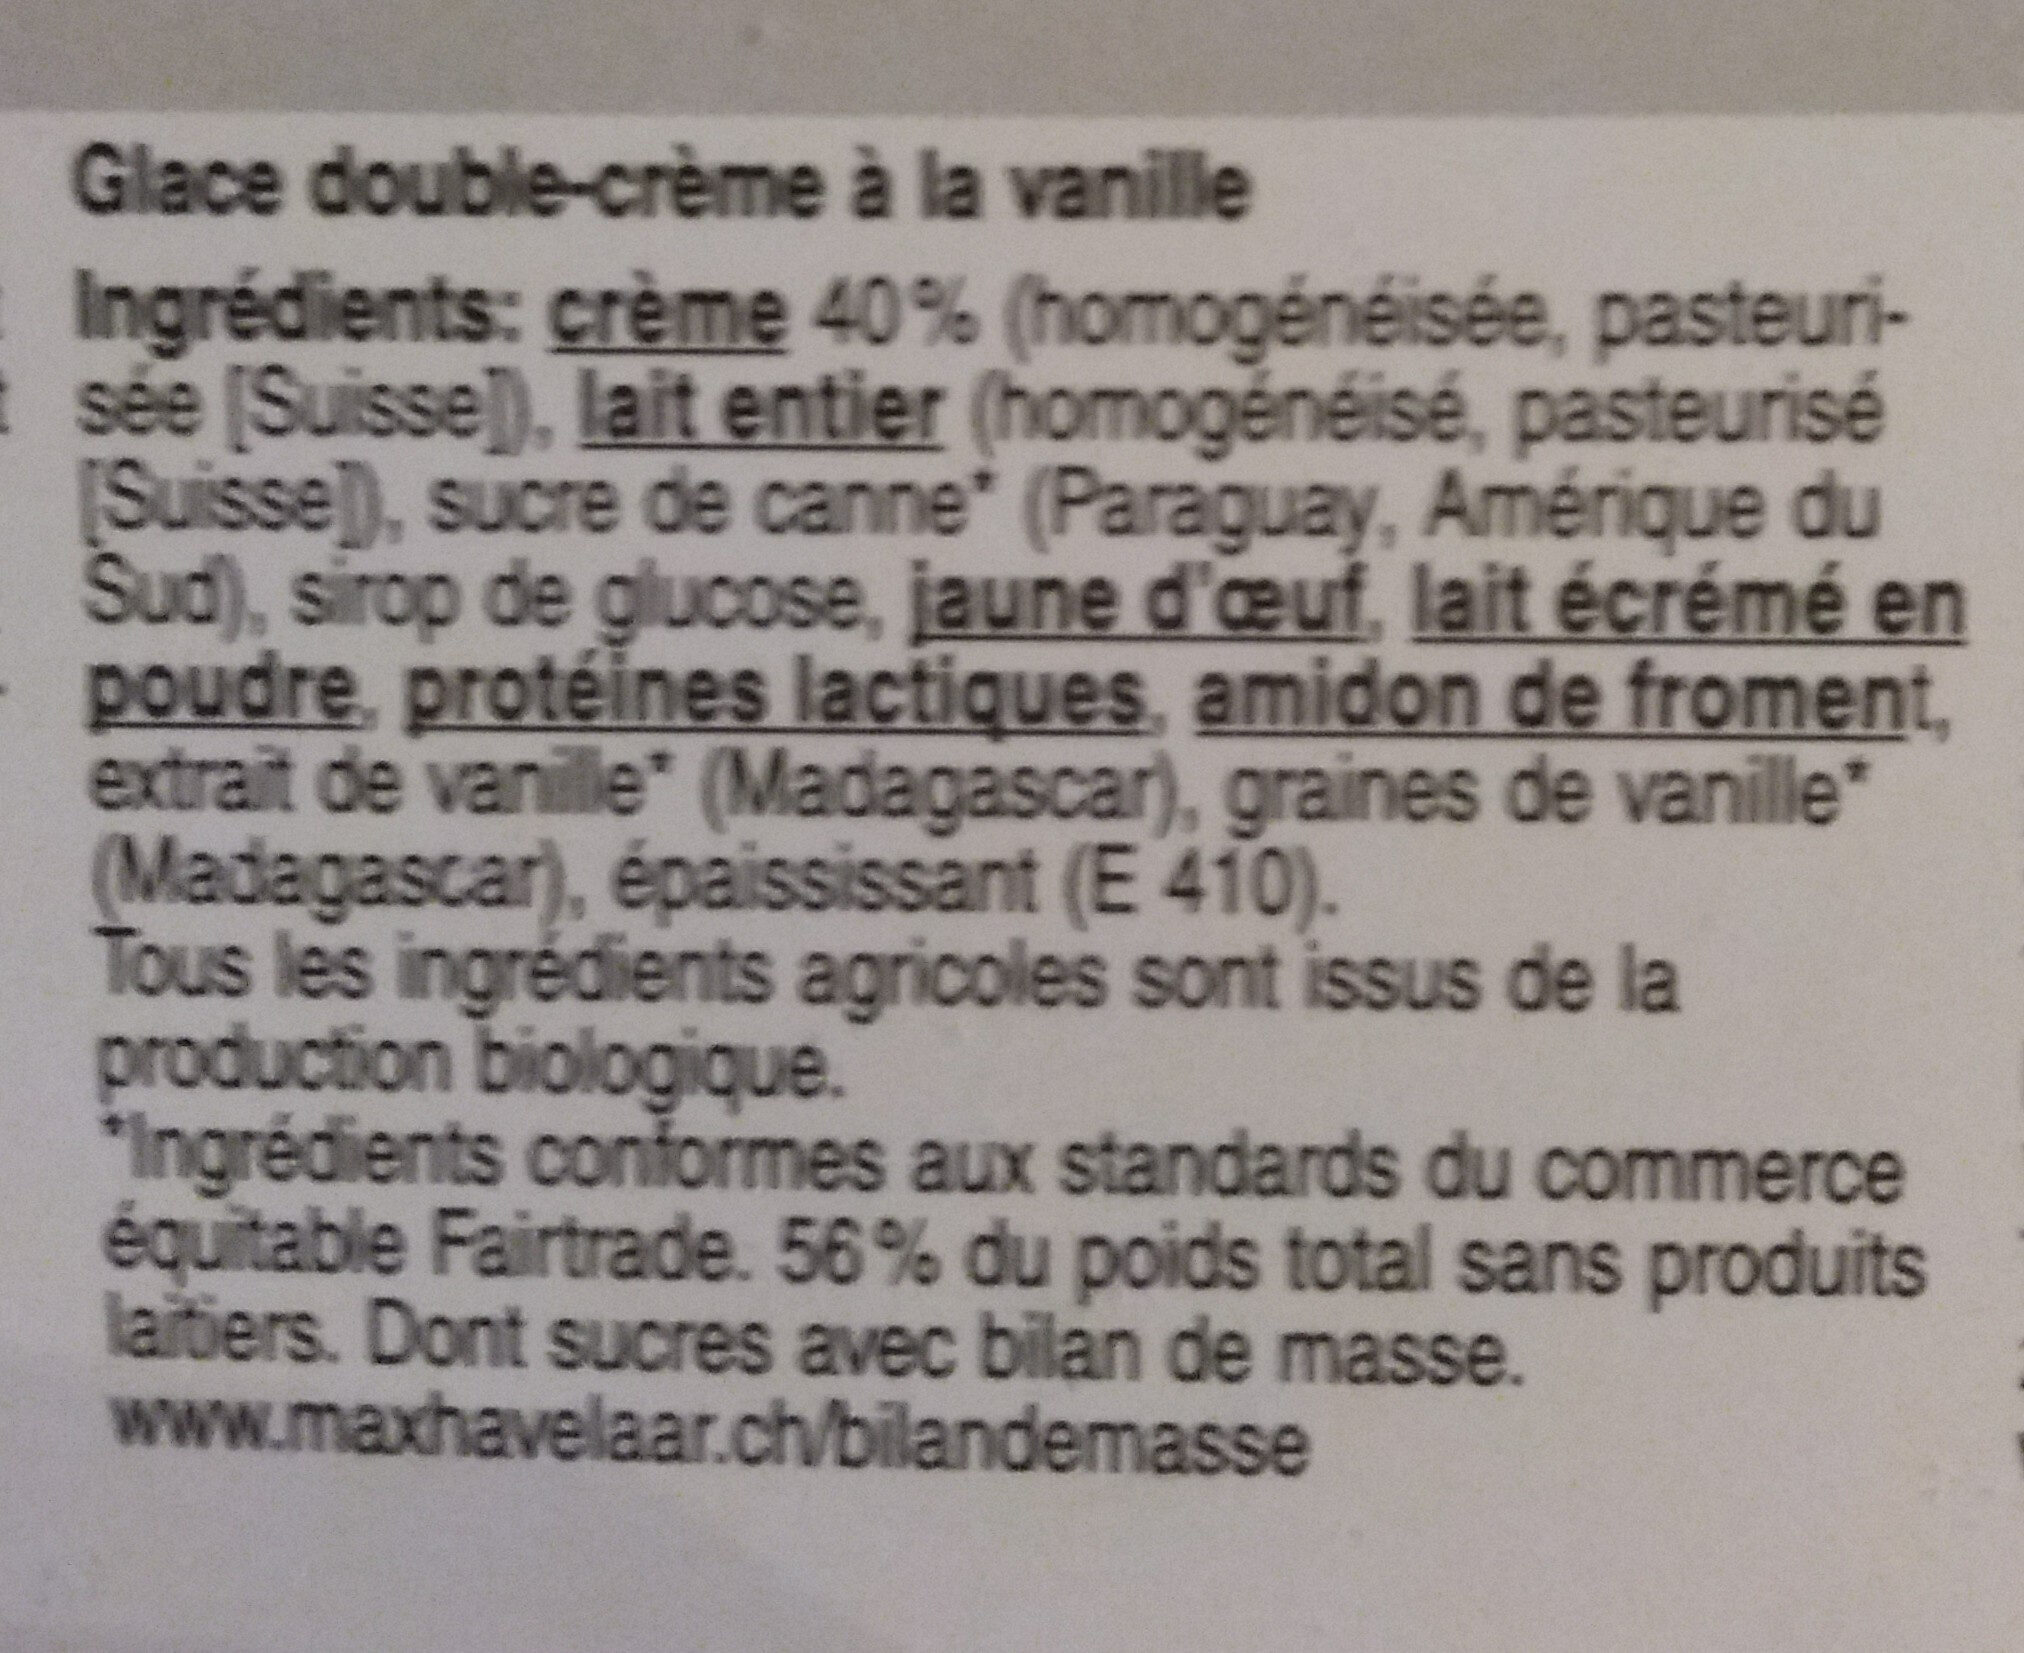 Glace double crème vanille - Ingredients - fr